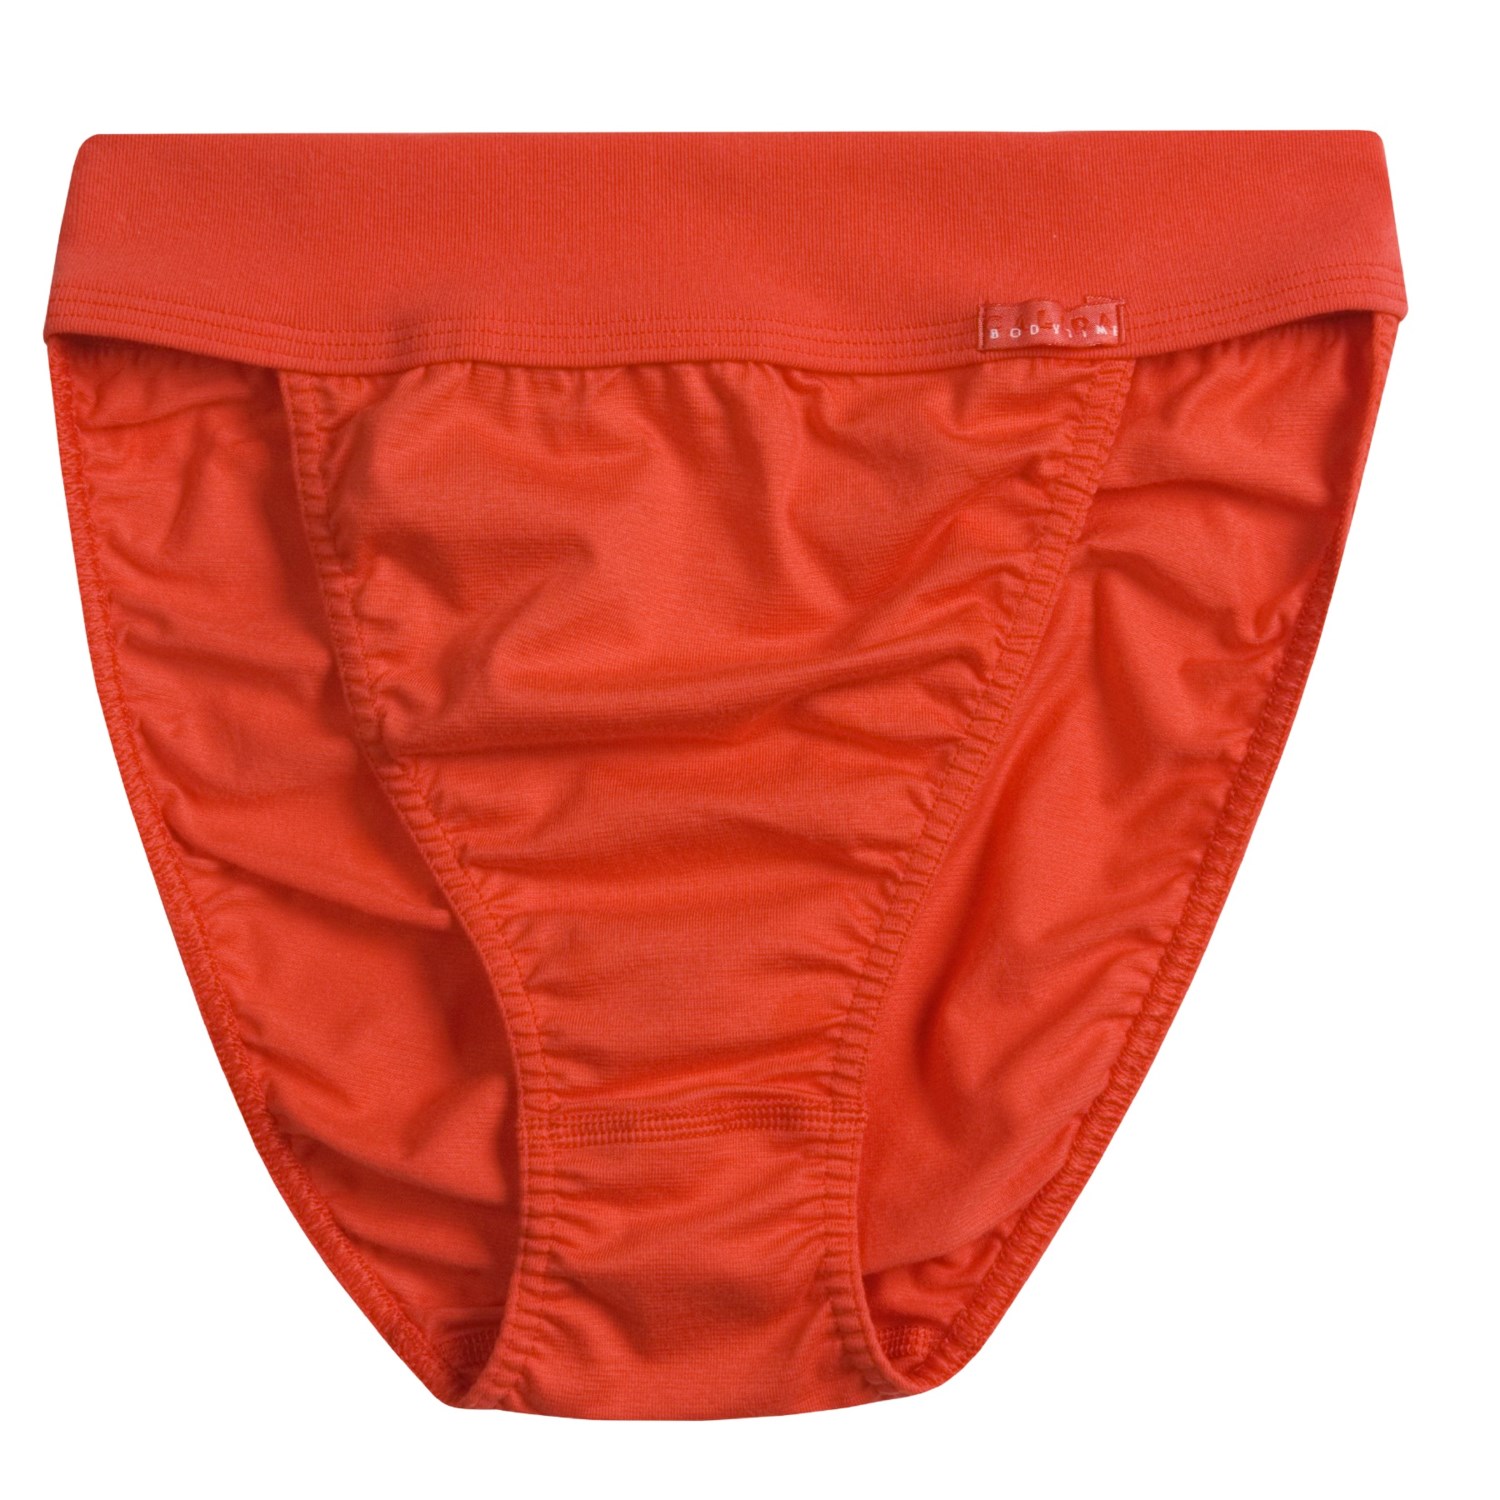 Calida Tanga Underwear (For Women) 86880 - Save 75%